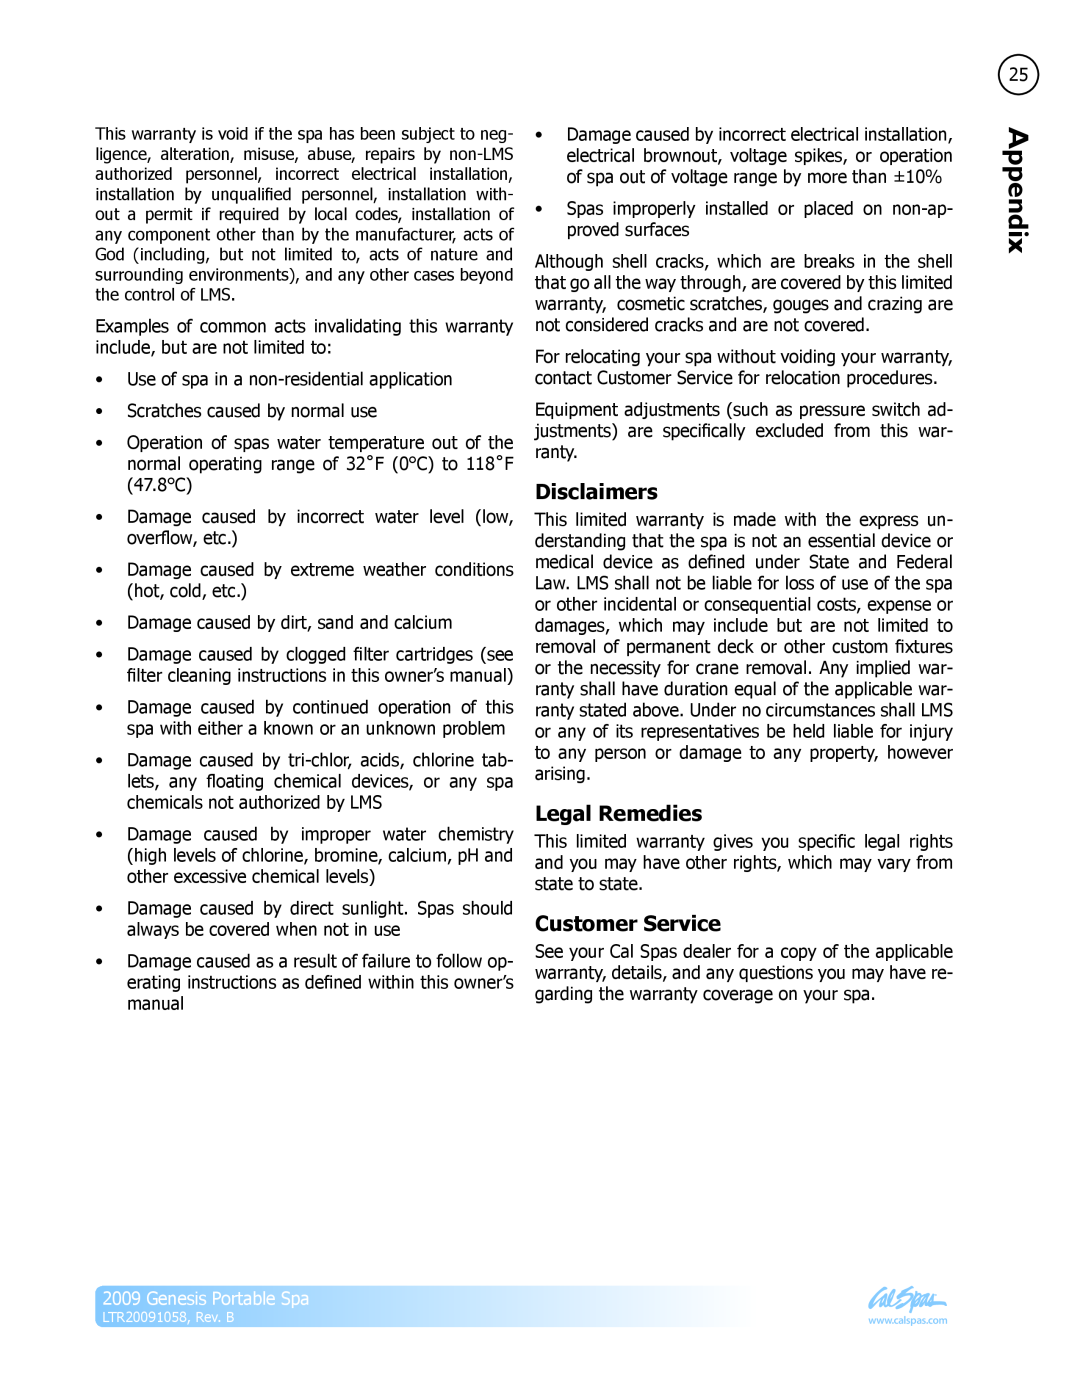 Cal Spas LTR20091058 manual Disclaimers, Legal Remedies, Customer Service, Genesis Portable Spa 